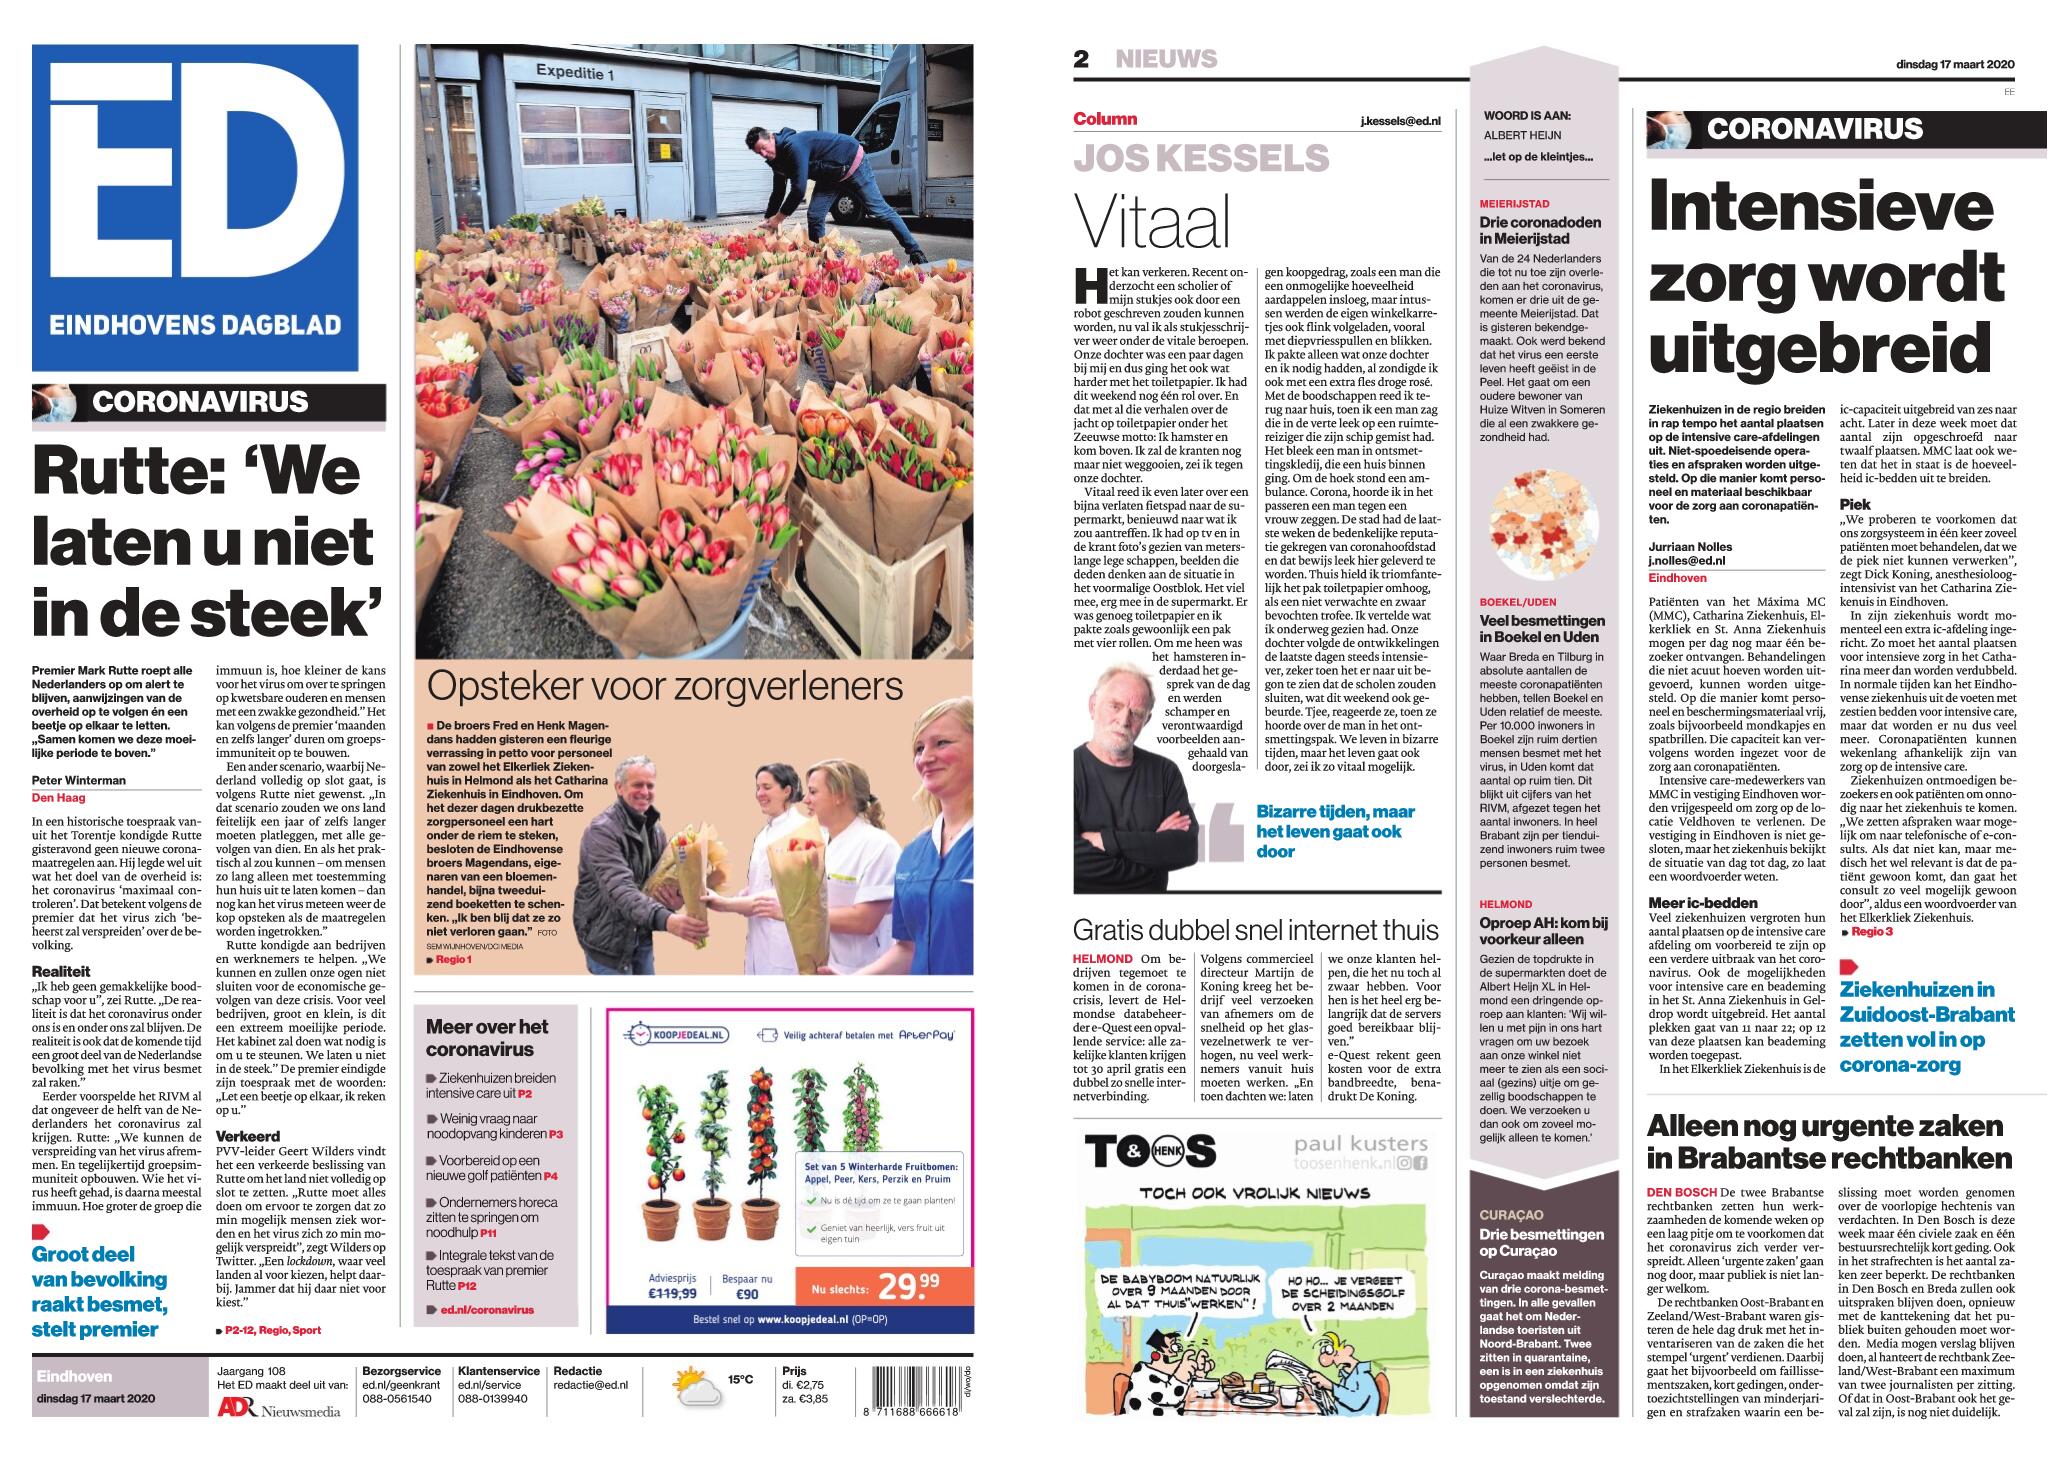 Eindhovens Dagblad - Zuid – 17 maart 2020